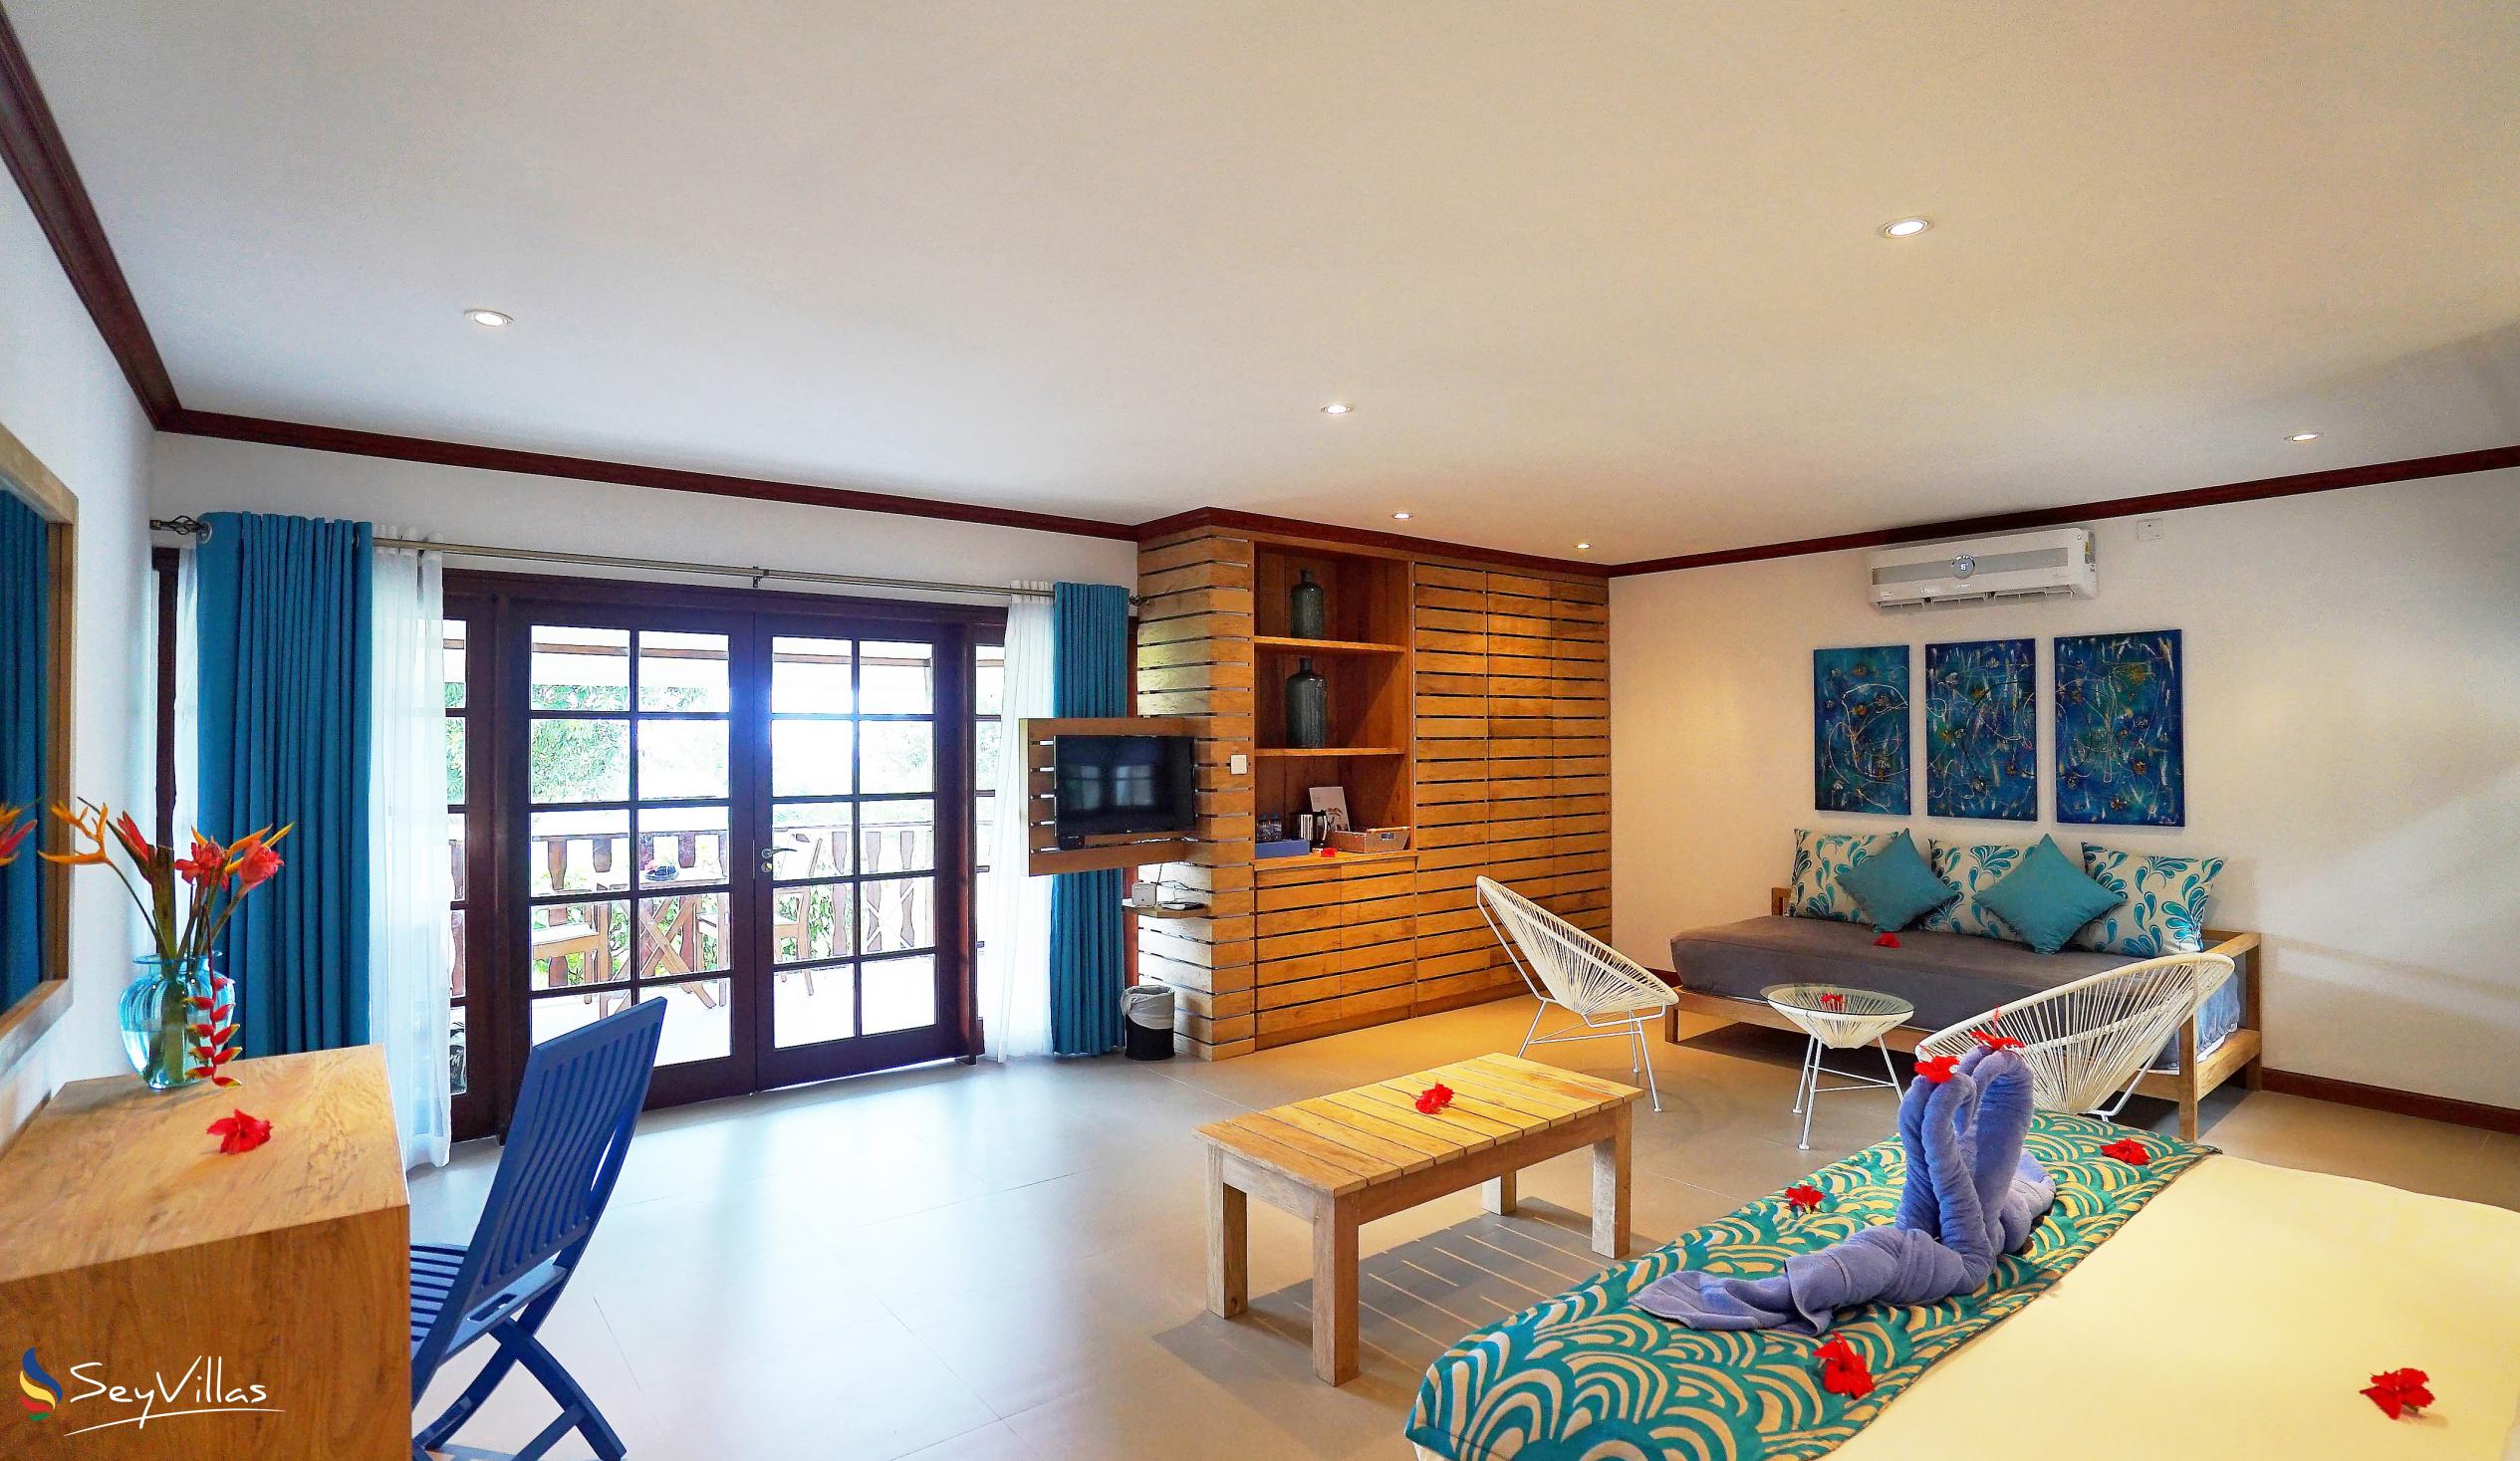 Photo 159: Hotel L'Archipel - Senior Suite - Praslin (Seychelles)